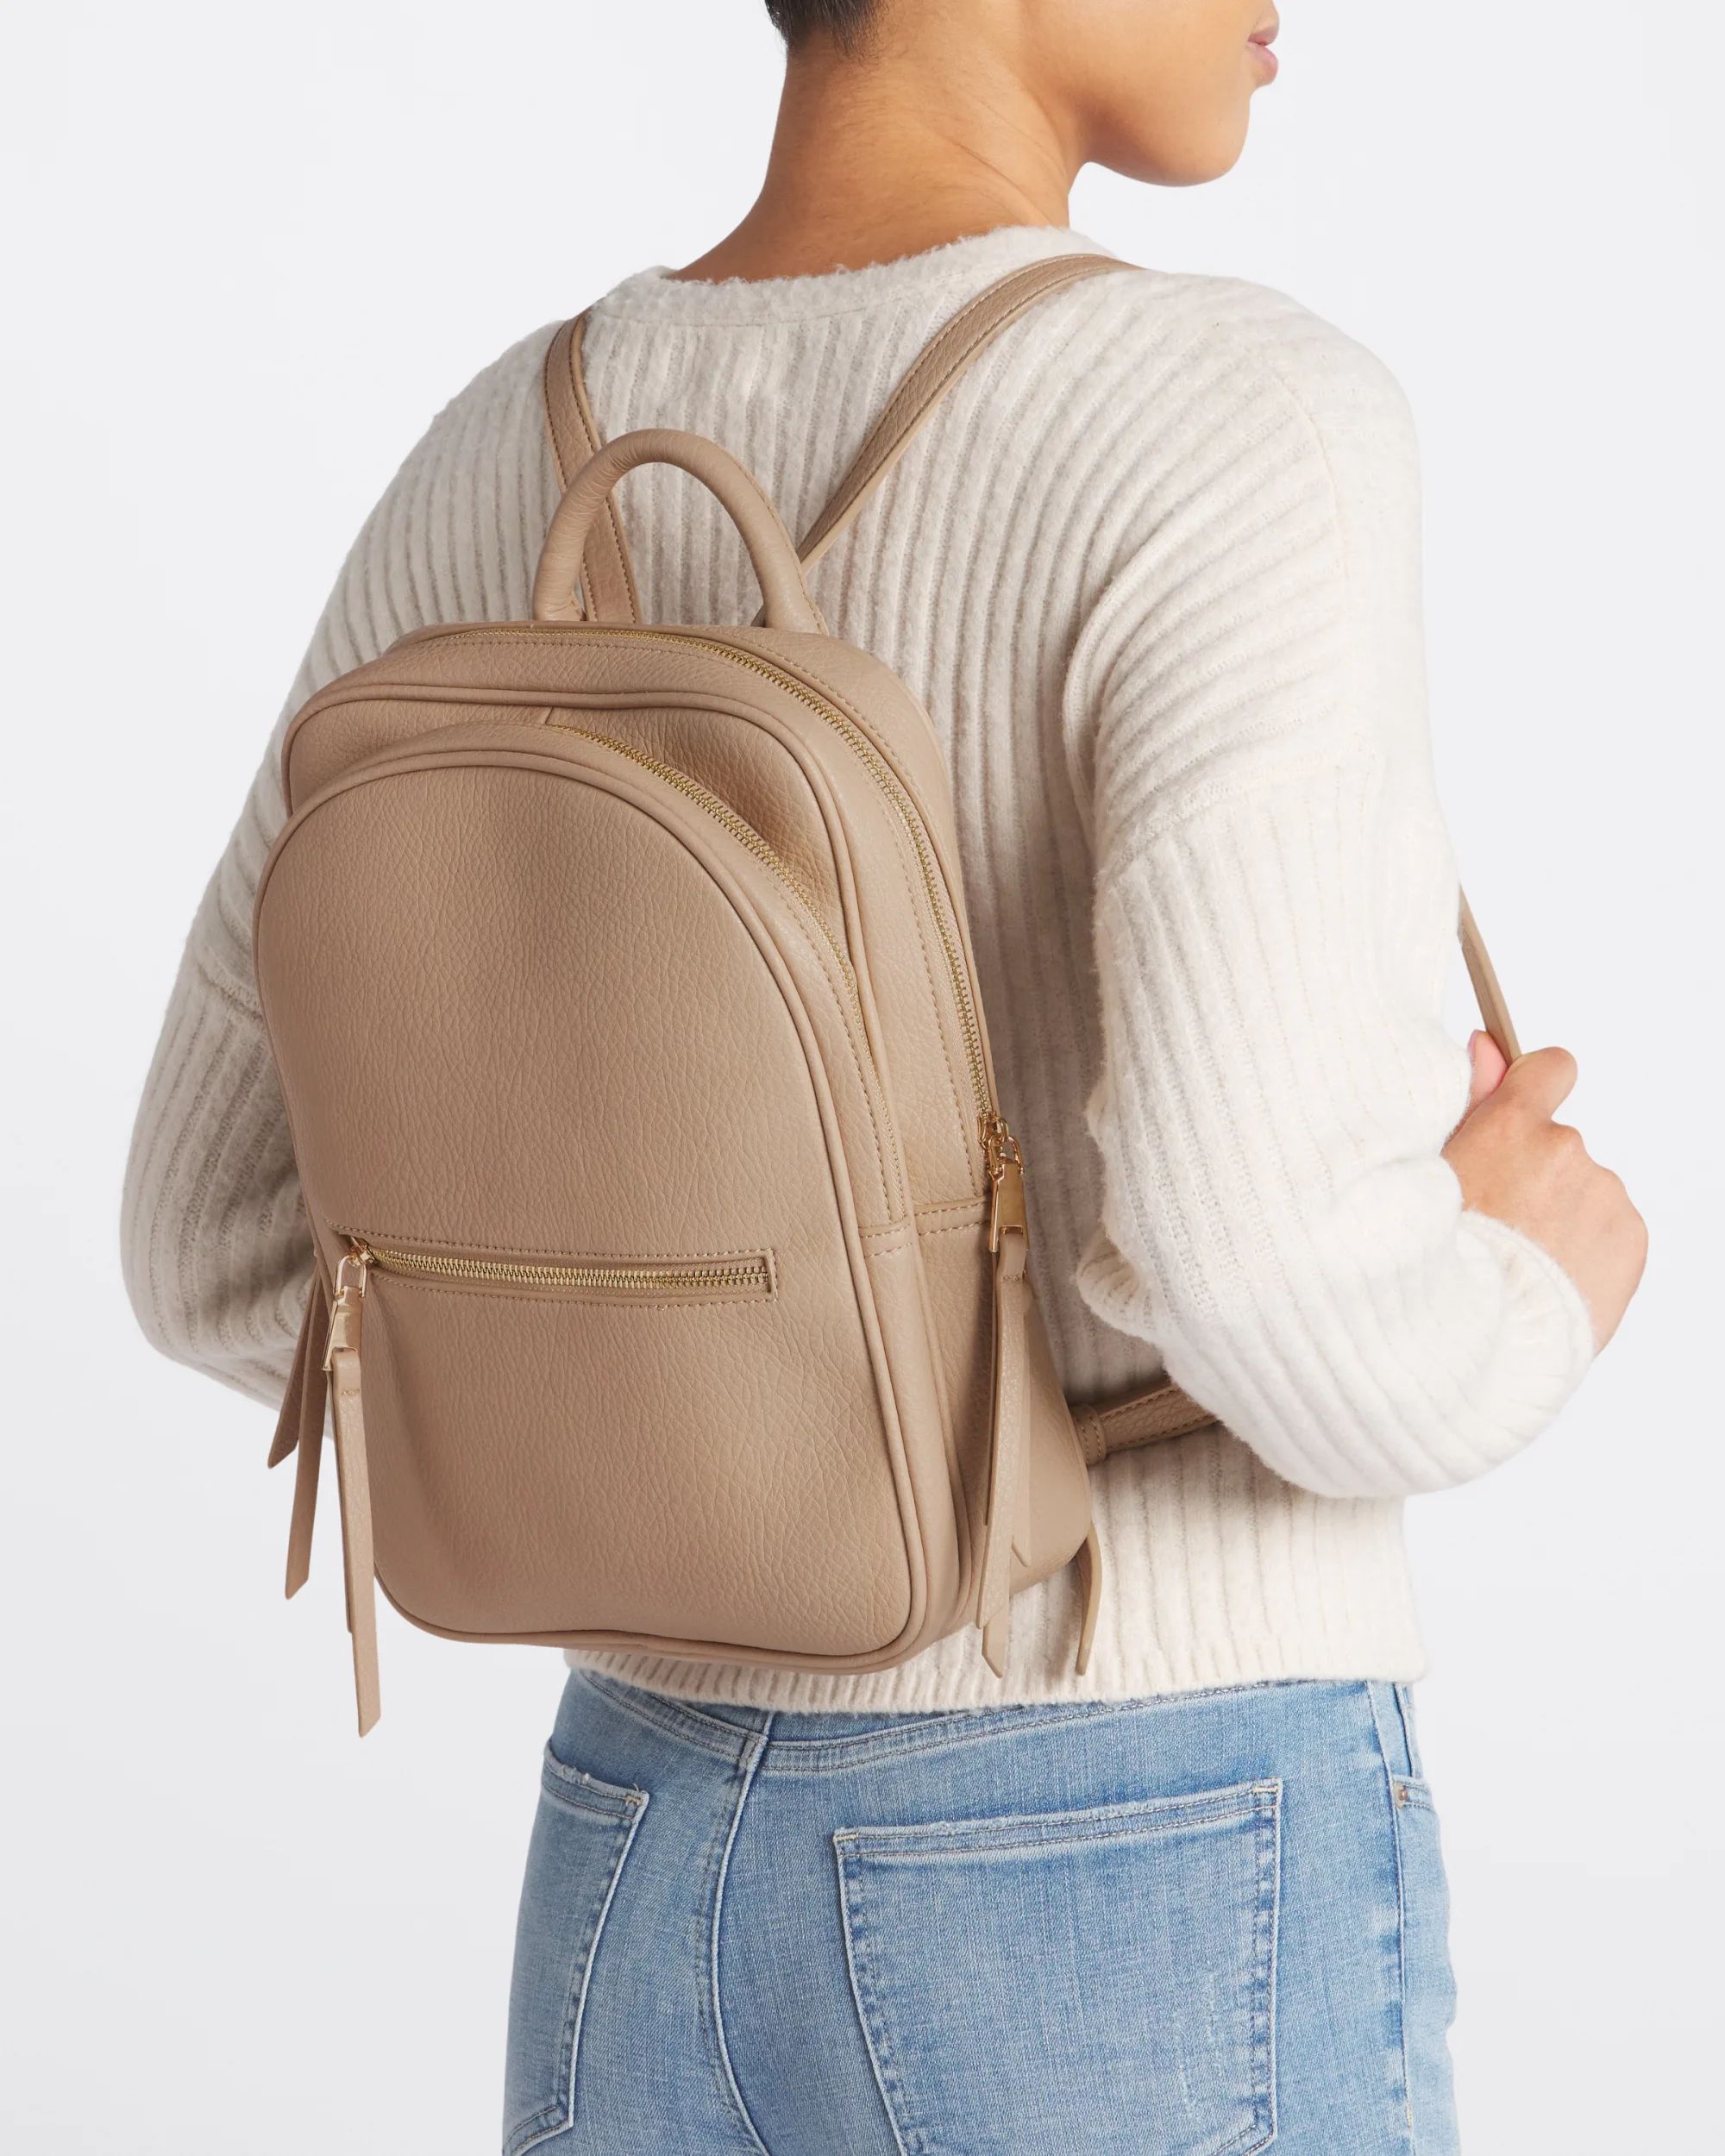 Evans Backpack | Stitch Fix